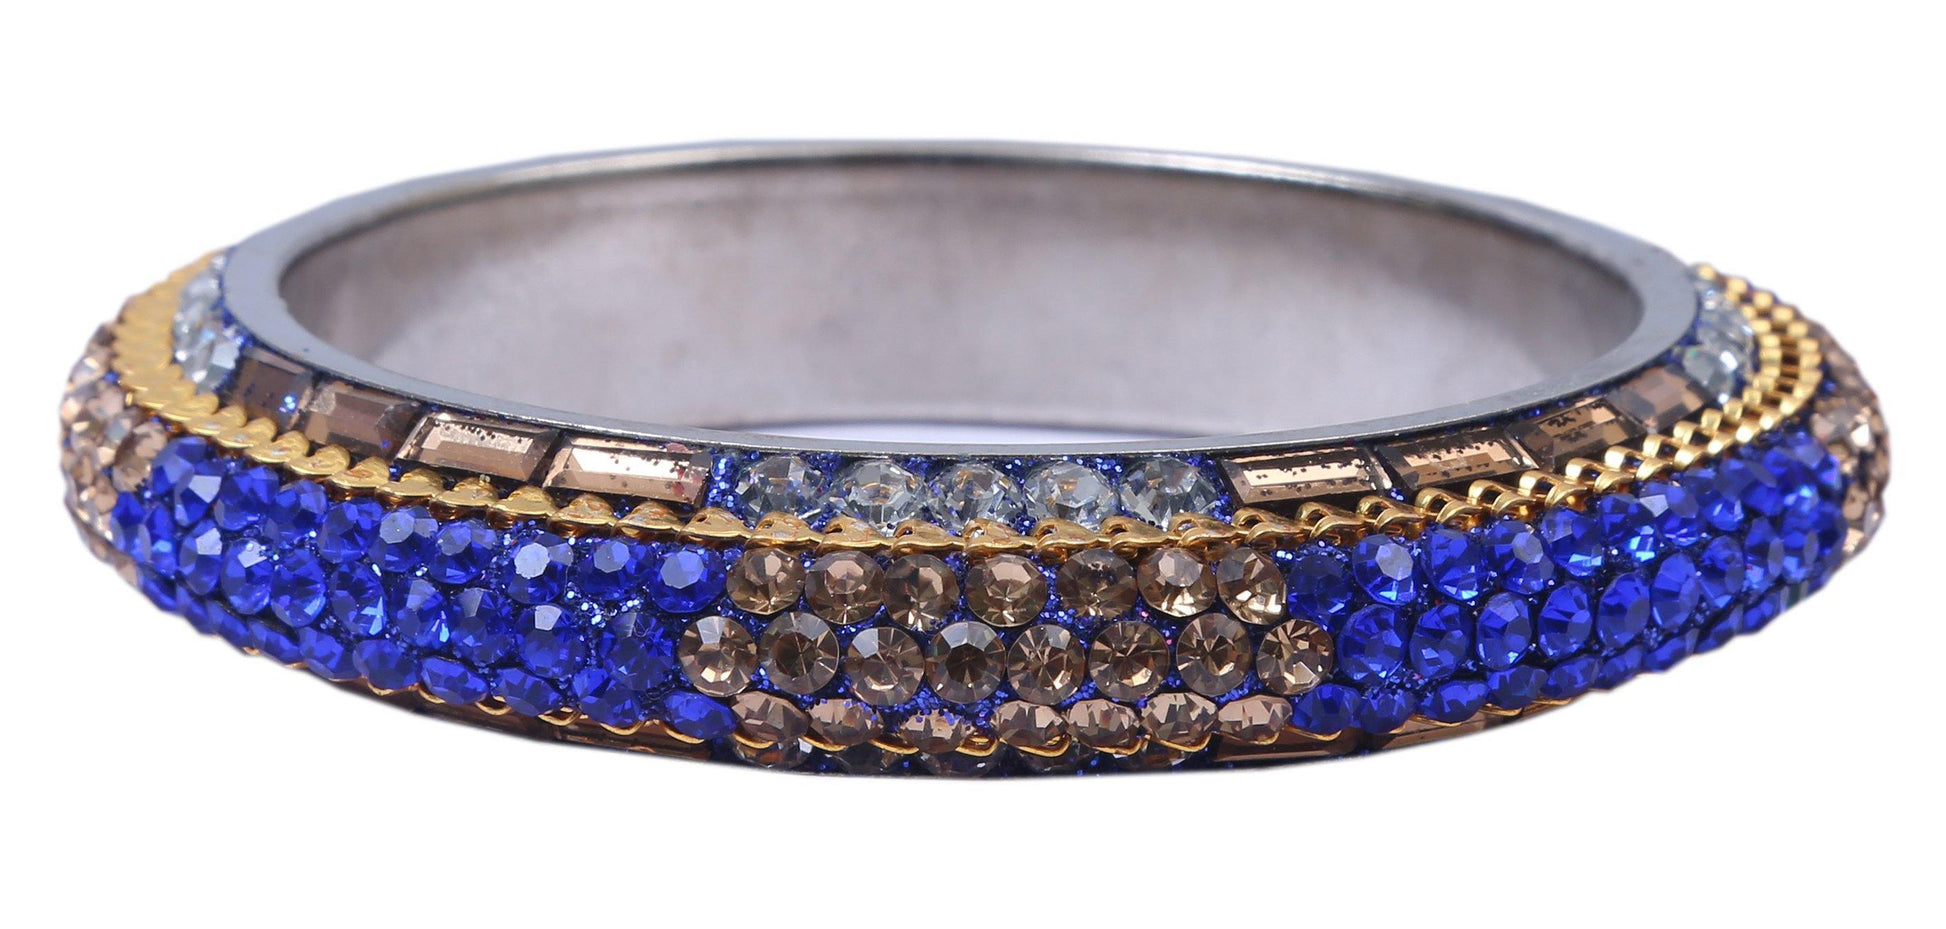 sukriti traditional stylish party-wear blue brass bangles bracelet for women & girls - set of 2